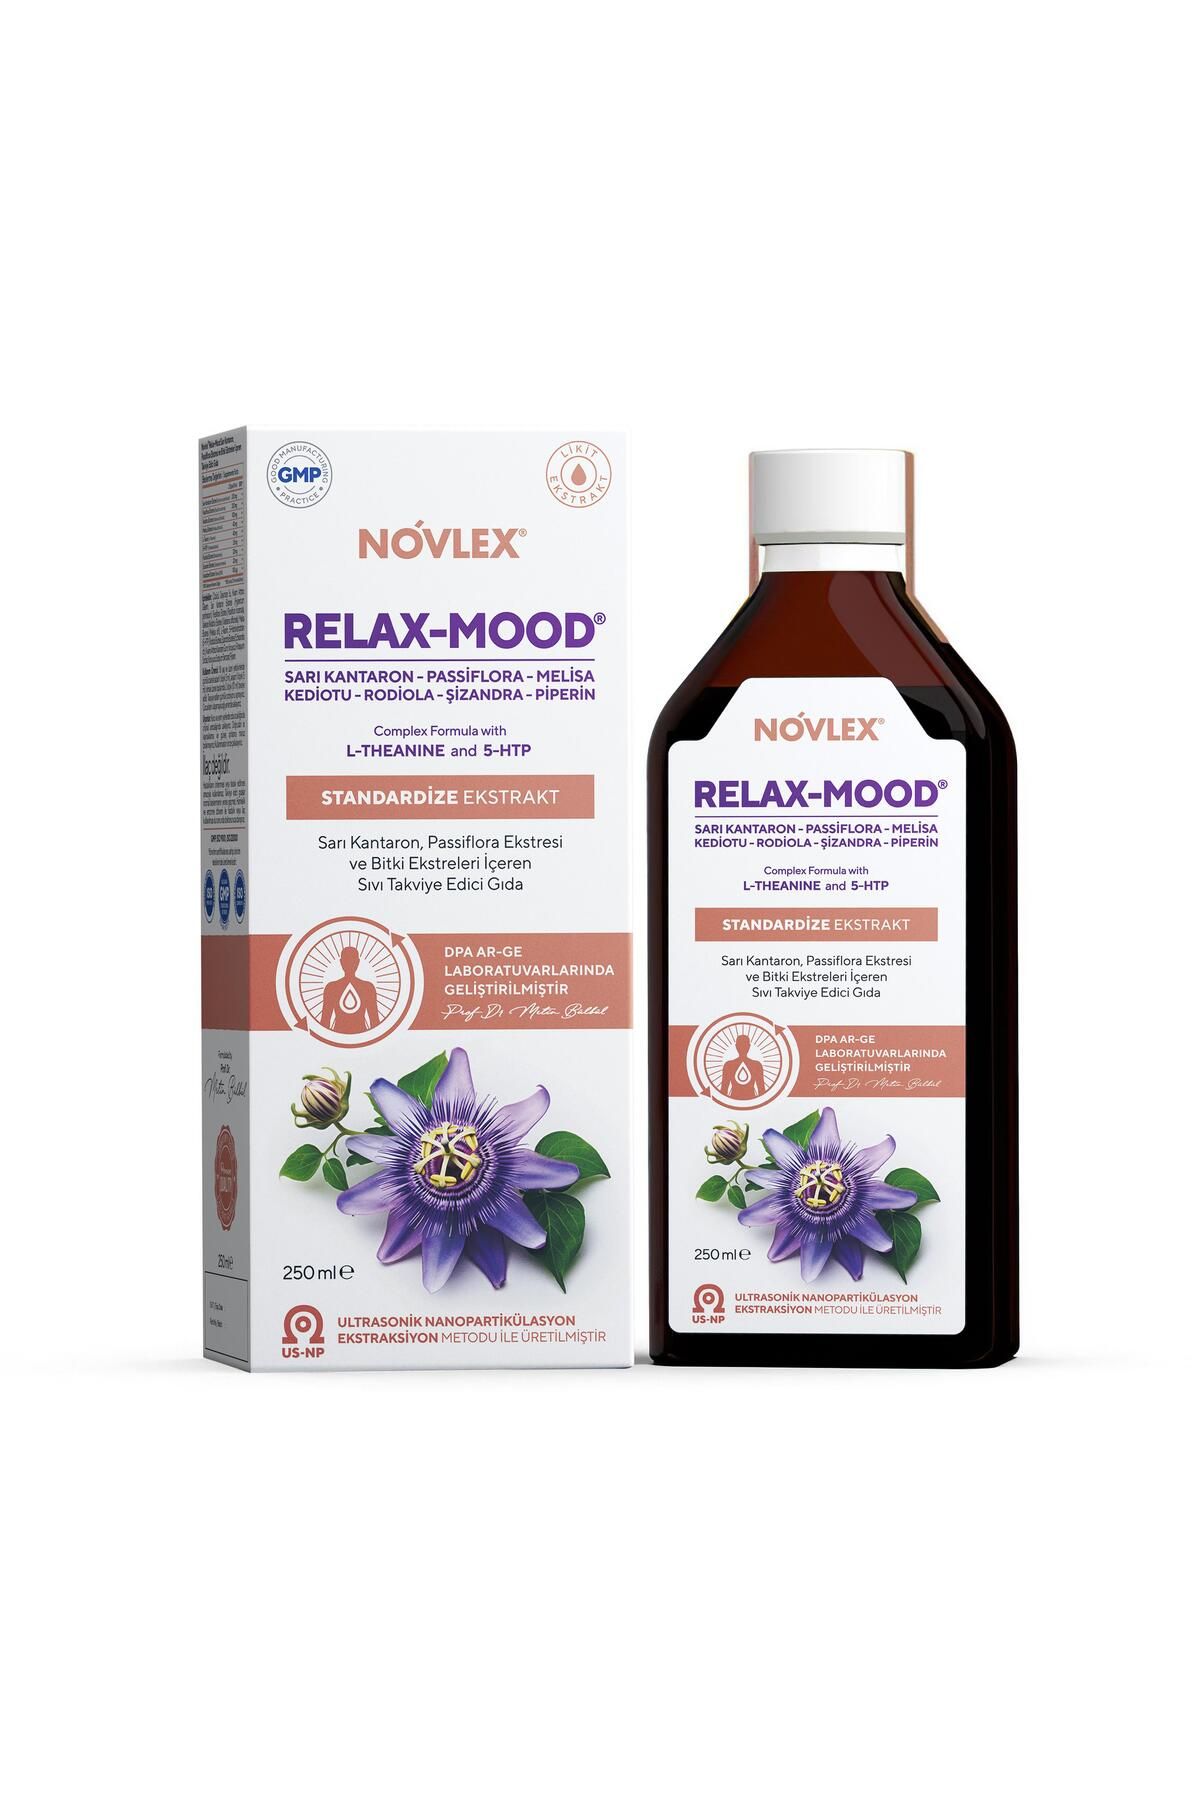 novlex Relax-Mood Sarı Kantaron (St. John’s Wort), Passiflora, Kediotu (Valerian),5-HTP, Rhodiola Ekstrakt